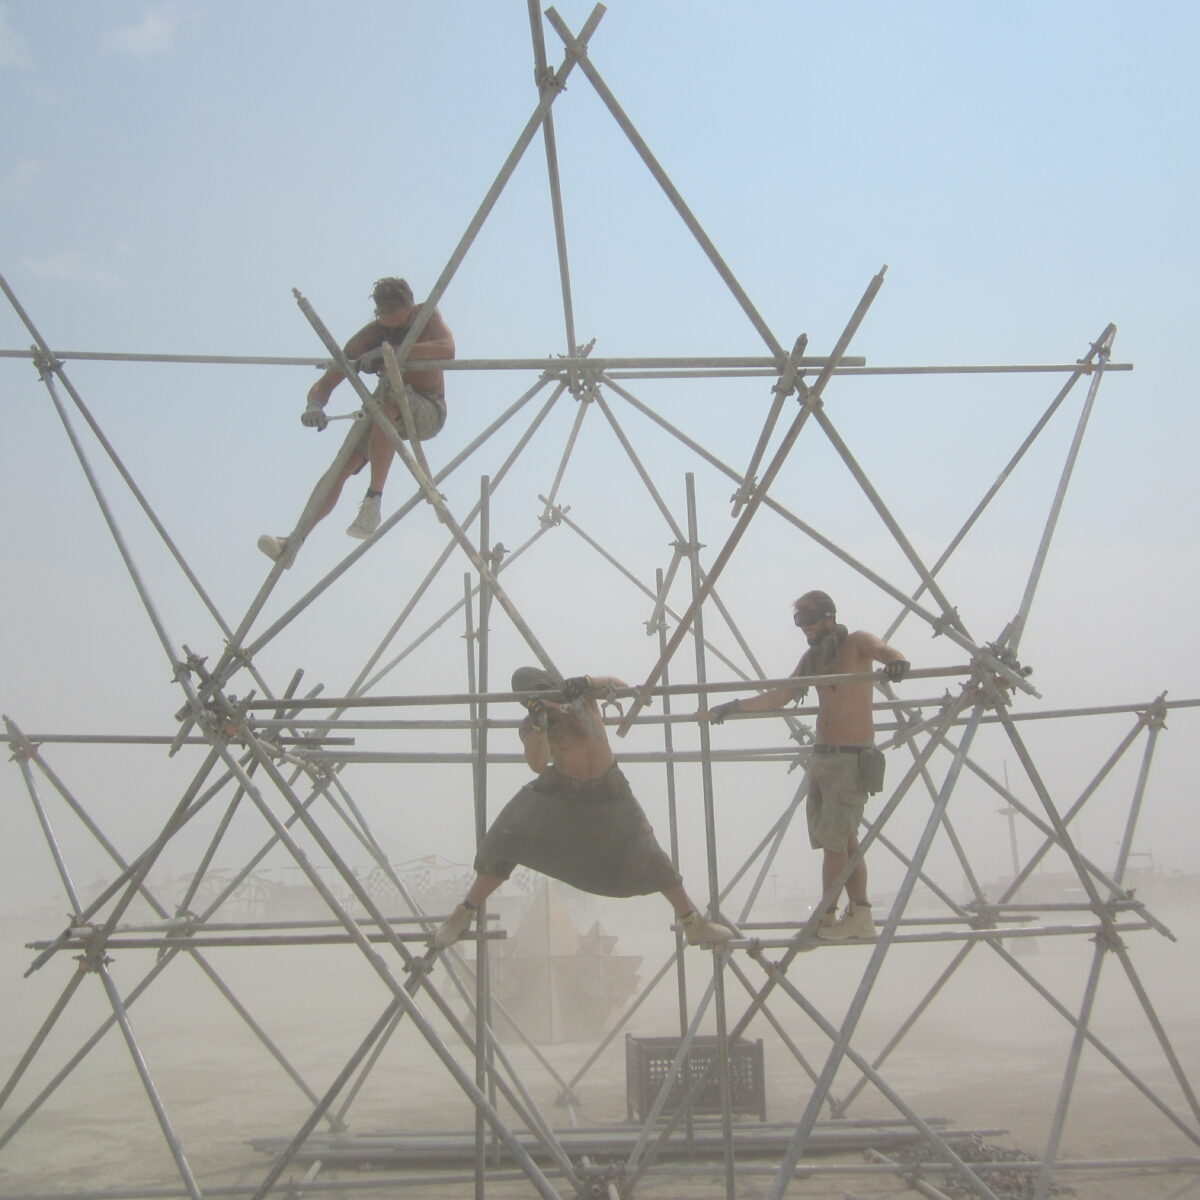 Toby Burgess, Tim Strnadt and Luka Kreze building the scaffolding.